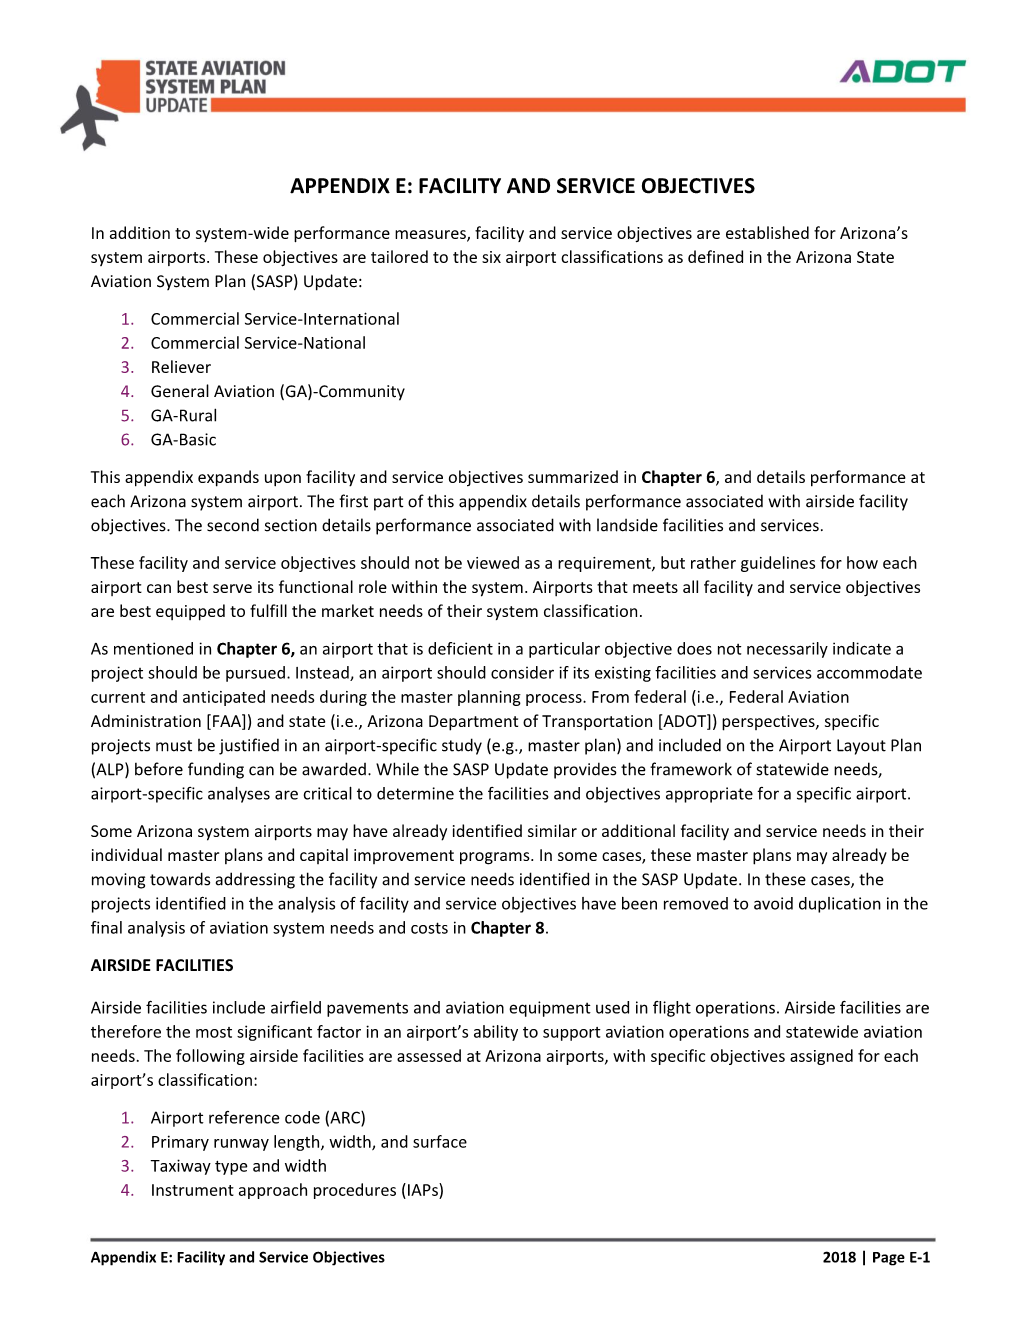 E. Appendix E: Facility and Service Objectives